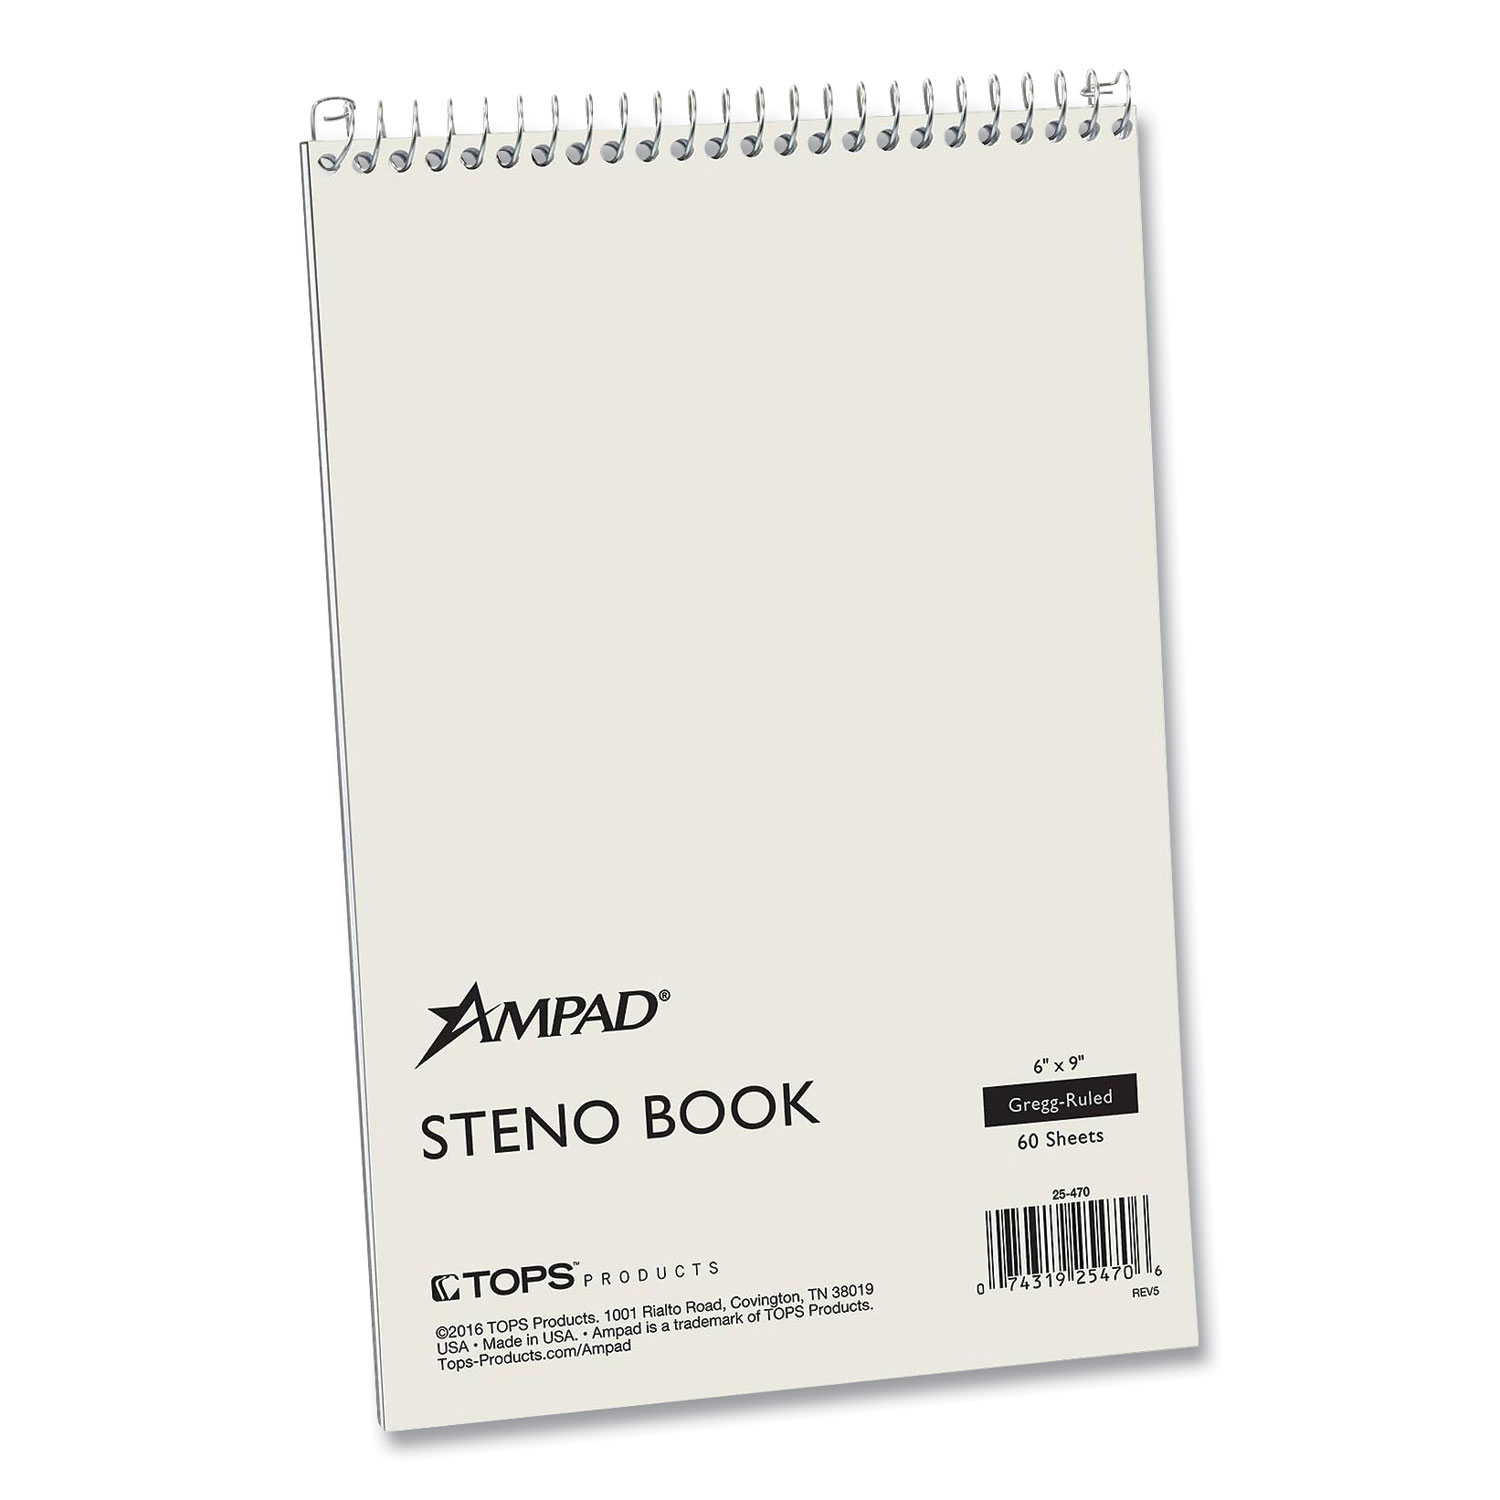  Ampad 25-470 Steno Books, Pitman Rule, White Cover, 6 x 9, 60 Green Tint Sheets (AMP532820) 